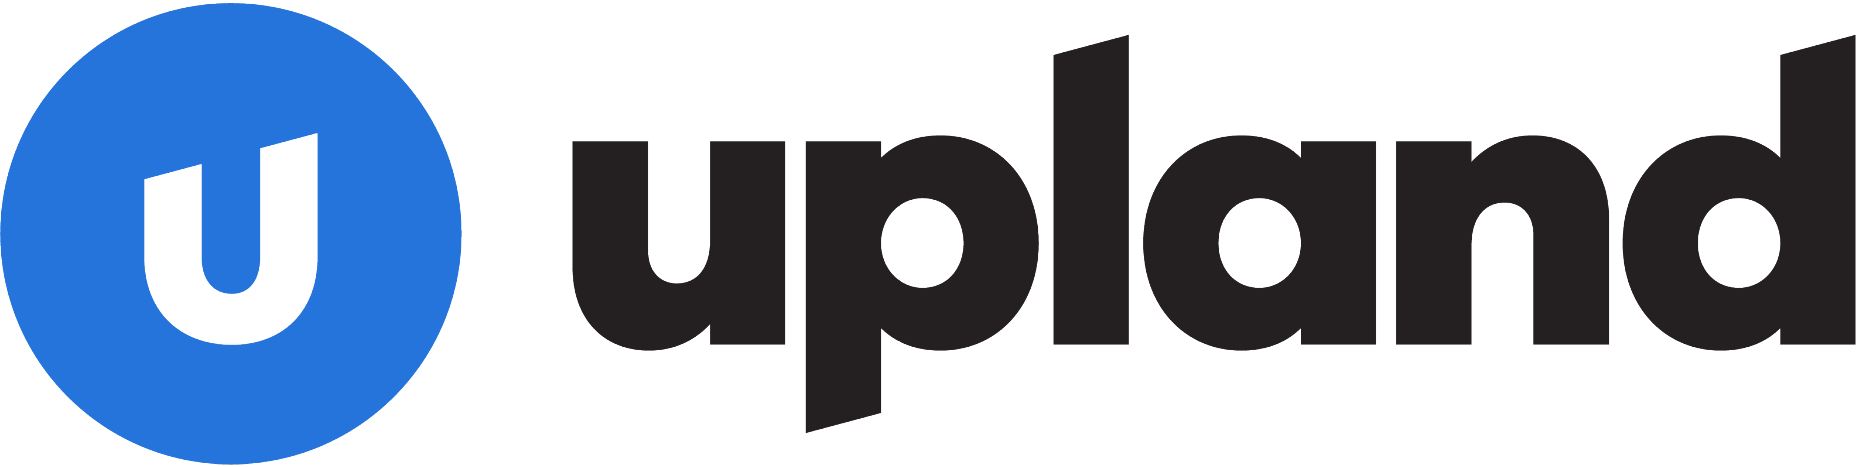 Upland Logo - JPEG_1.jpg